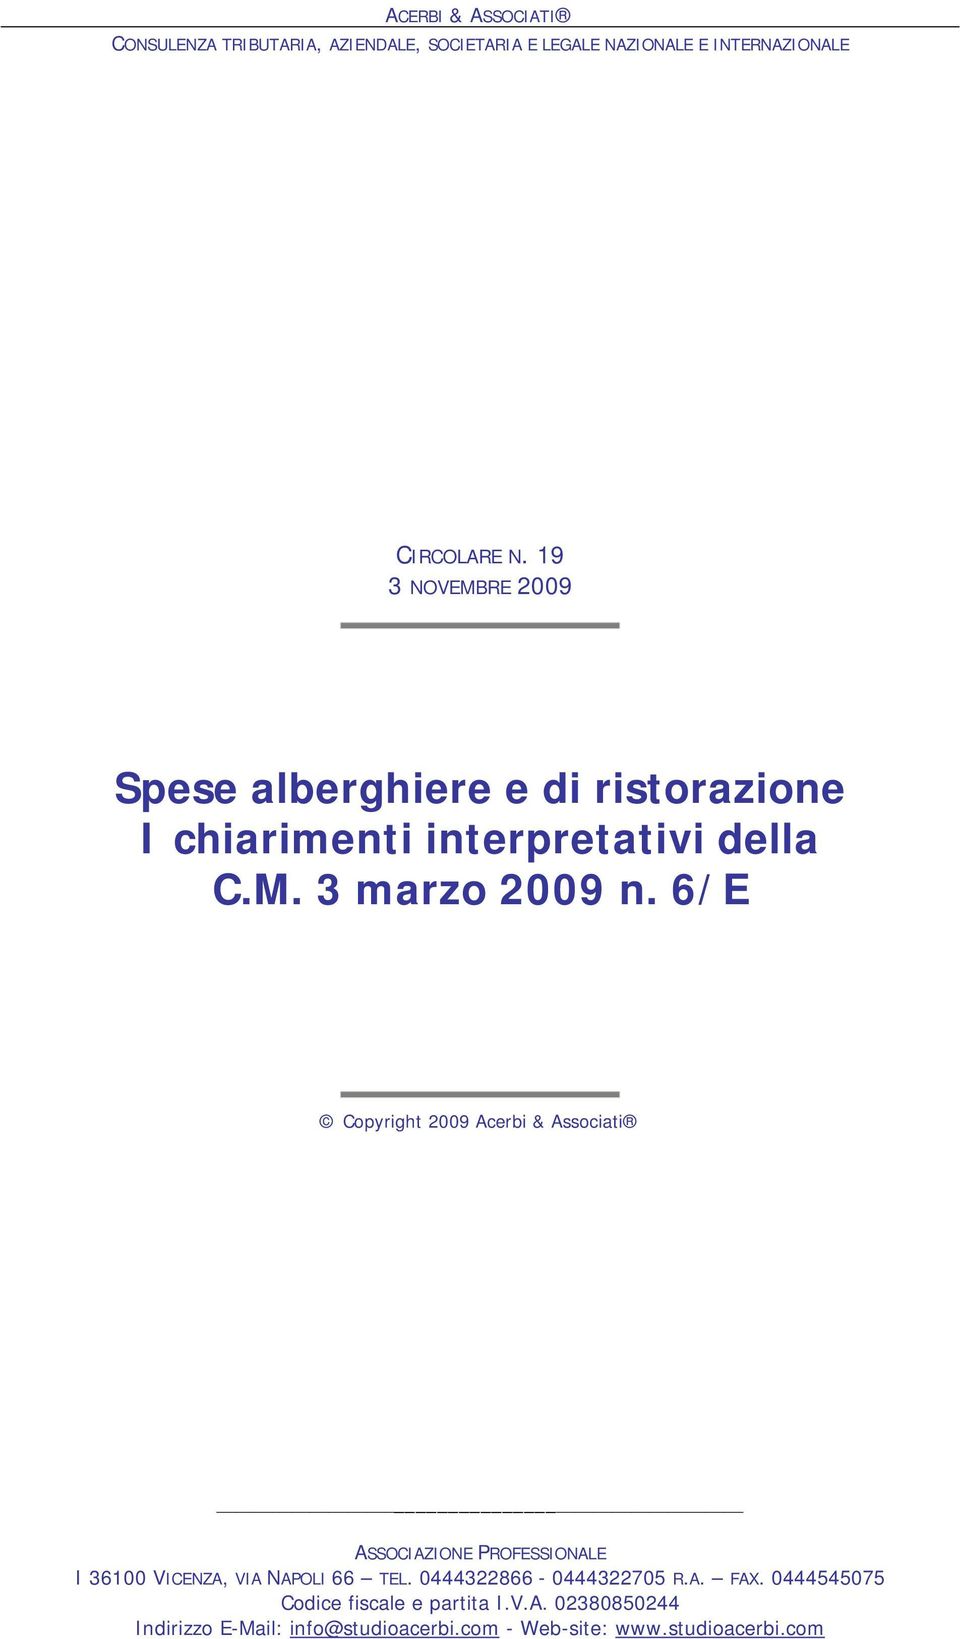 6/E Copyright 2009 Acerbi & Associati ASSOCIAZIONE PROFESSIONALE I 36100 VICENZA, VIA NAPOLI 66 TEL.